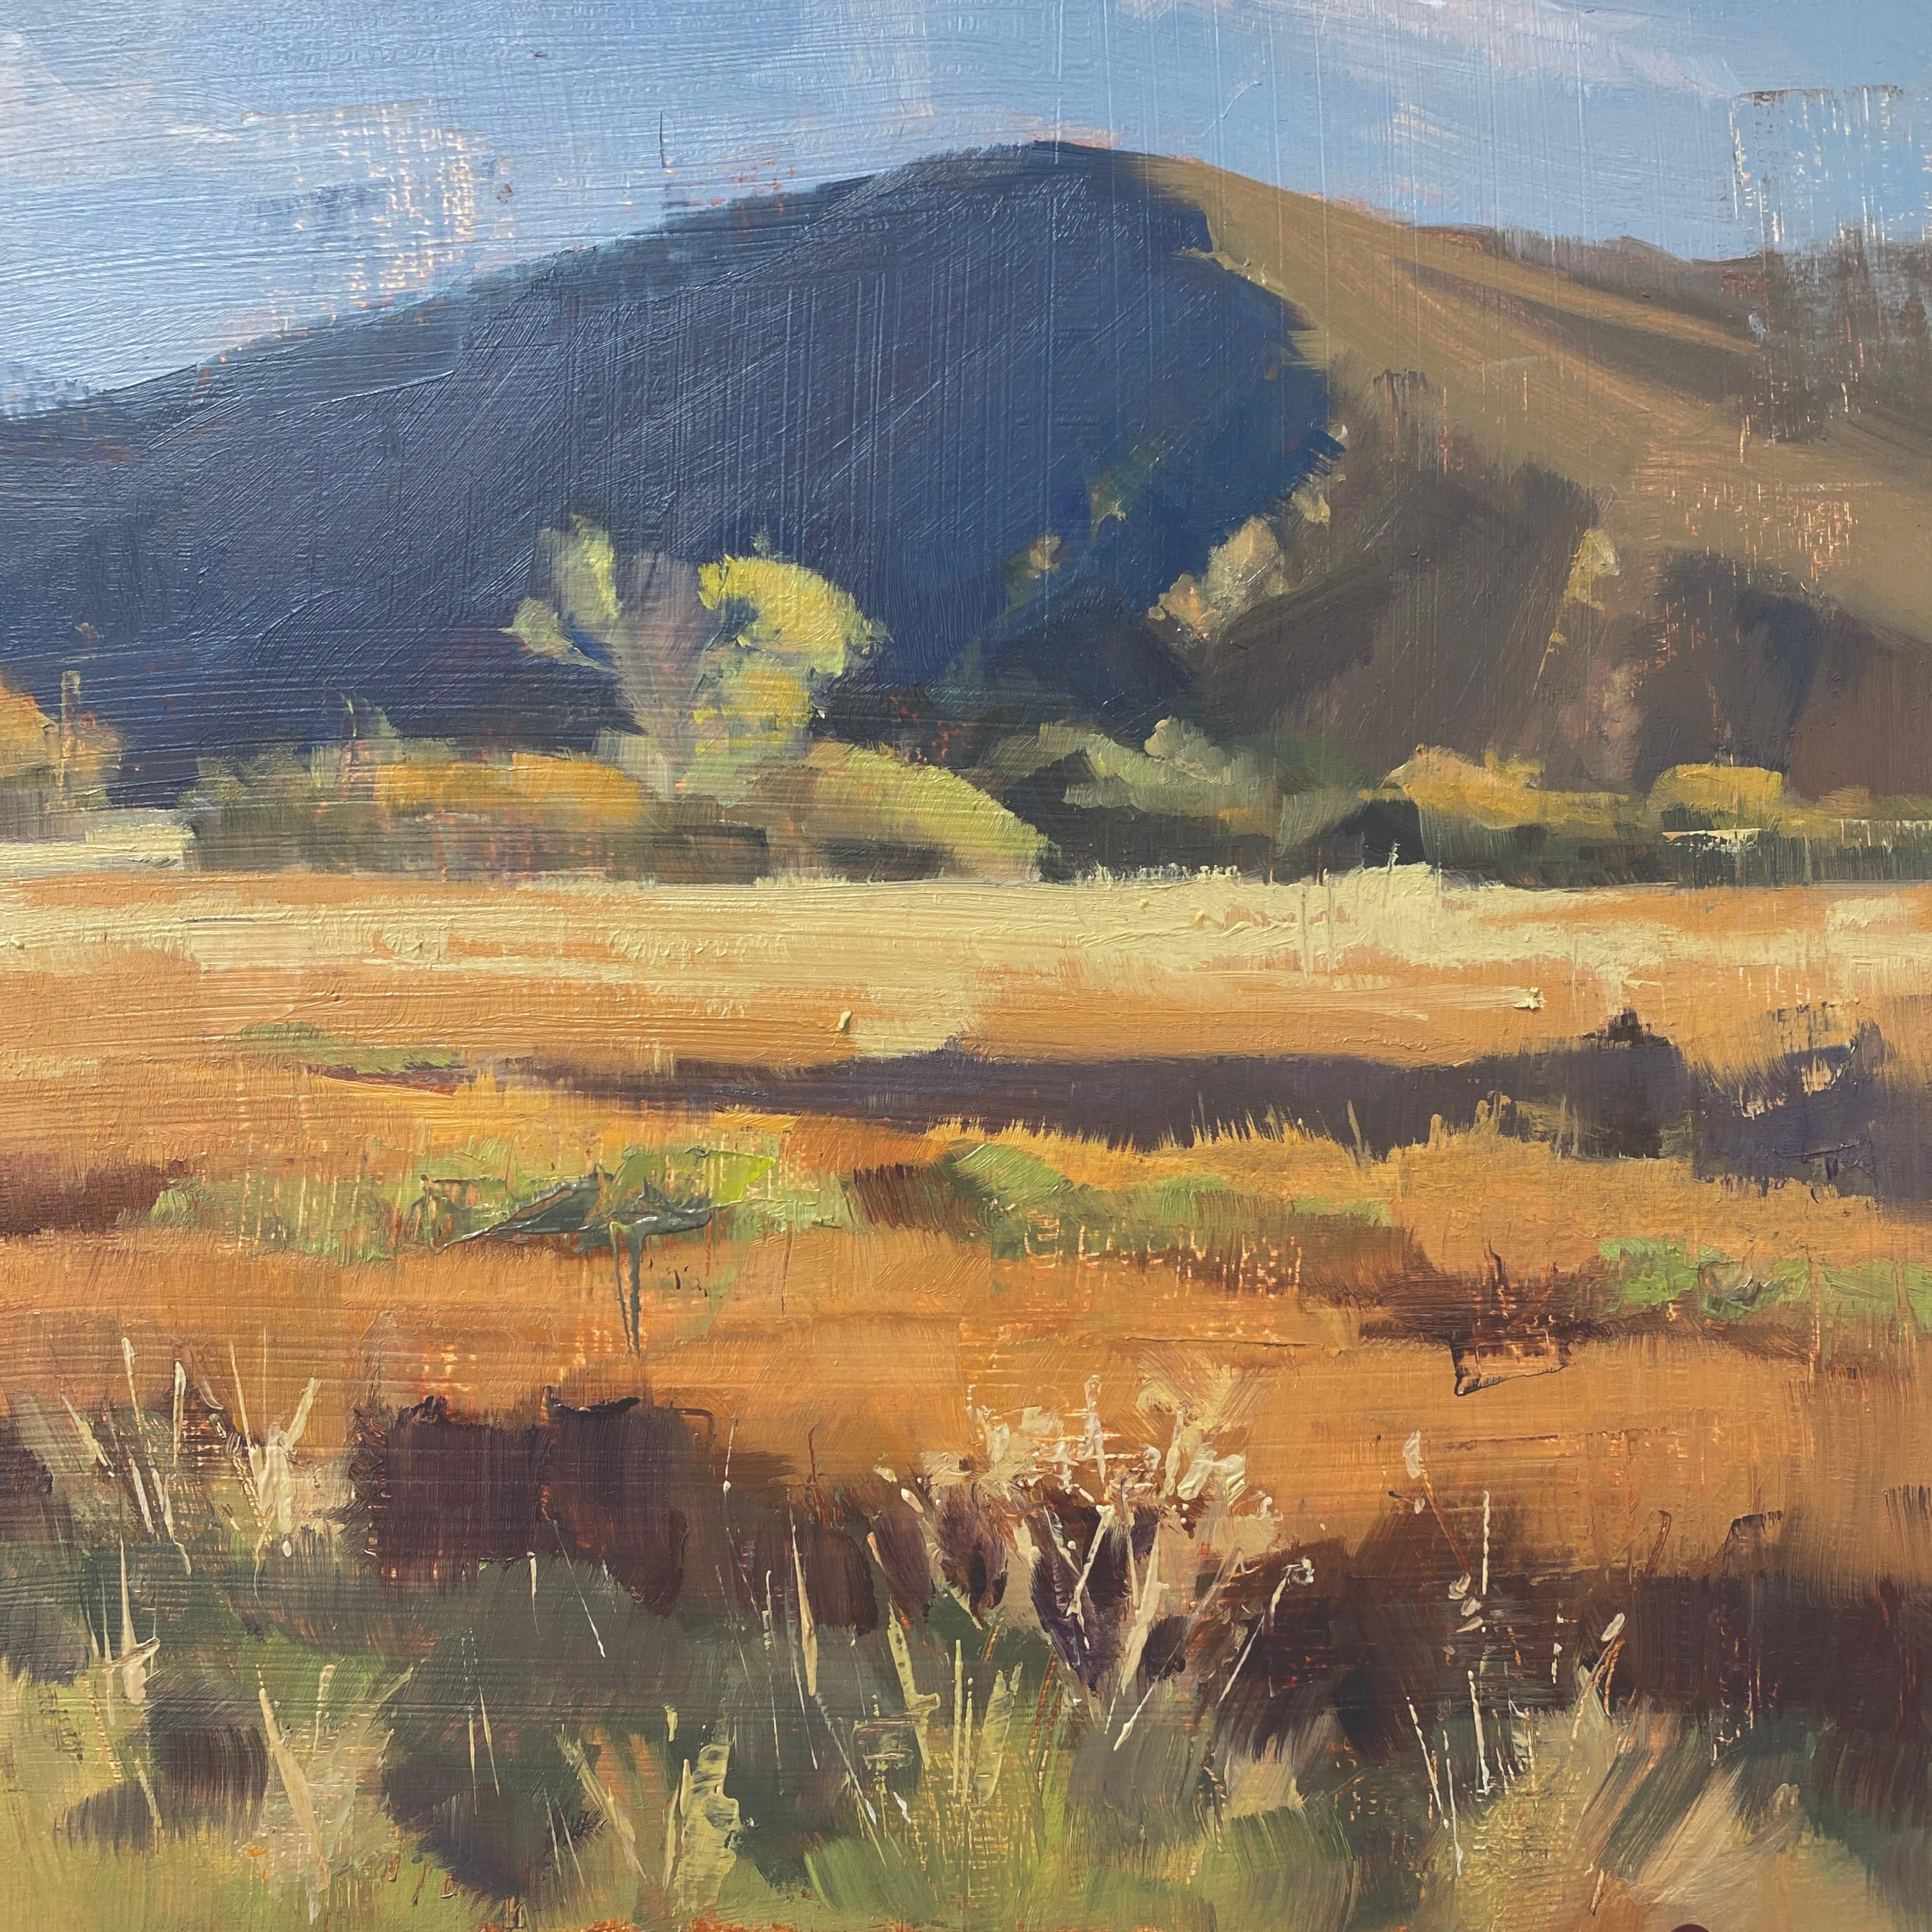 Judd Mercer Landscape Painting - "Fall Grass" Oil Painting